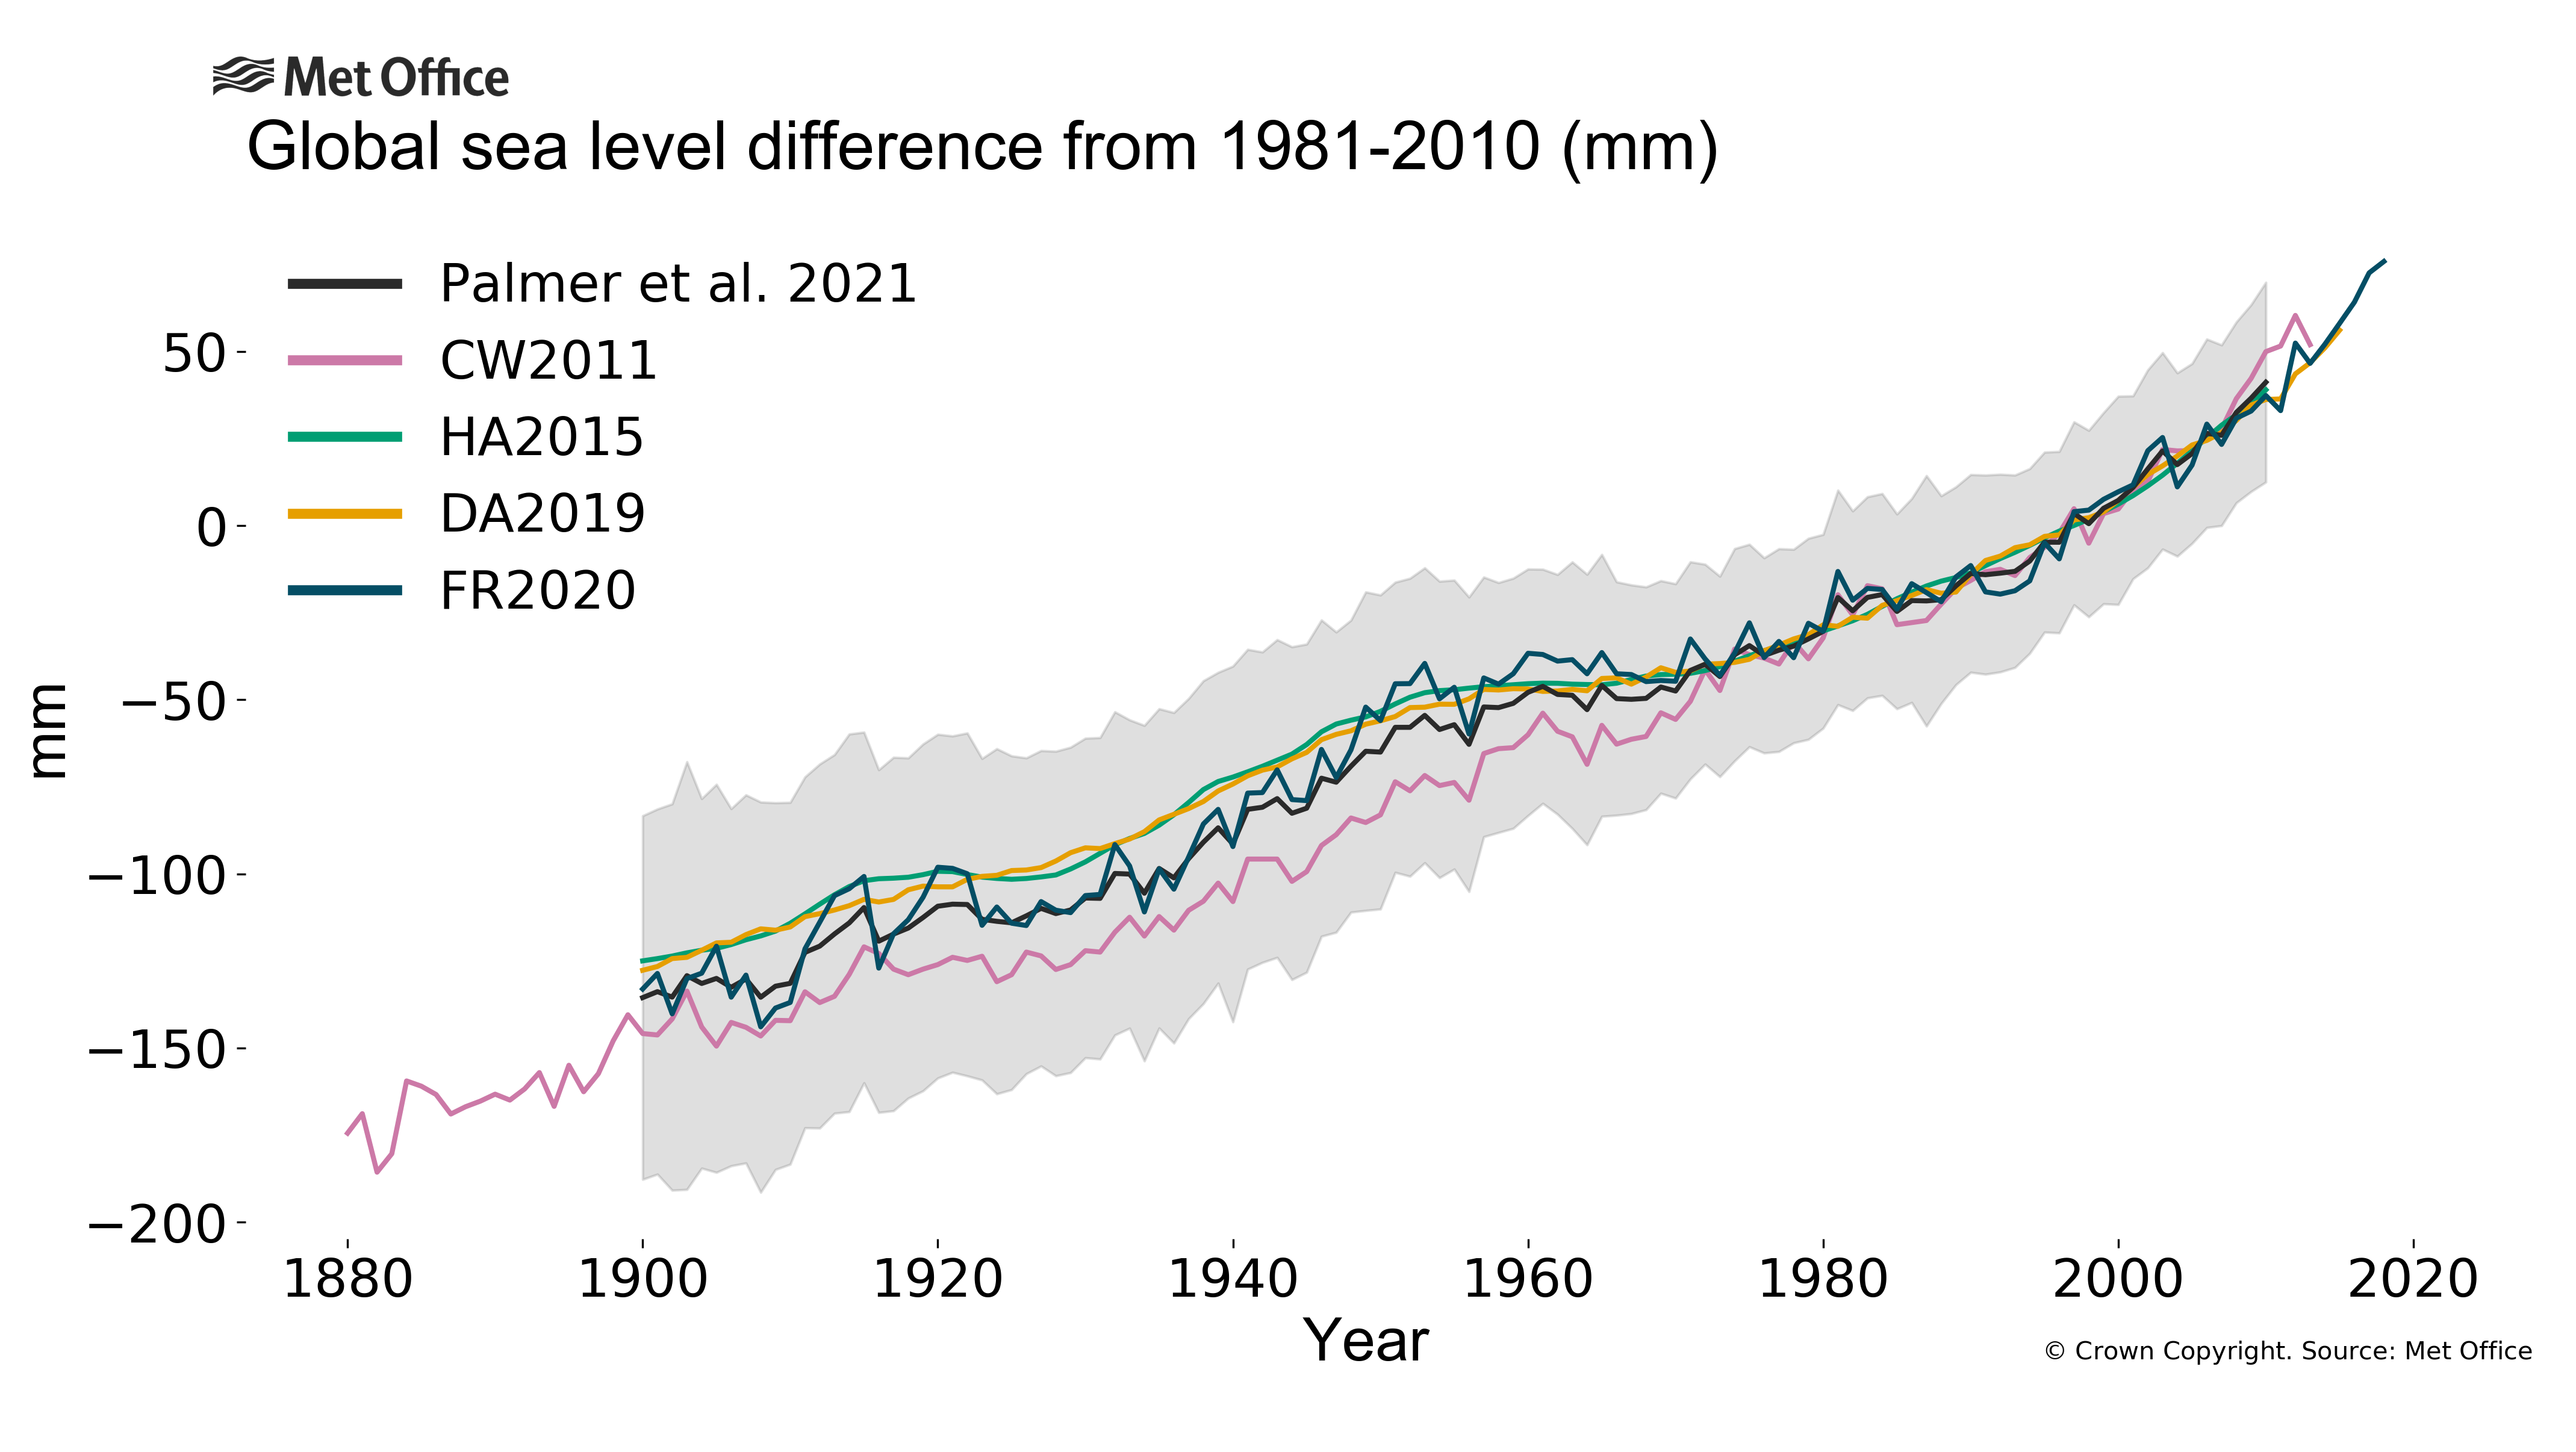 
Long term sea level change
